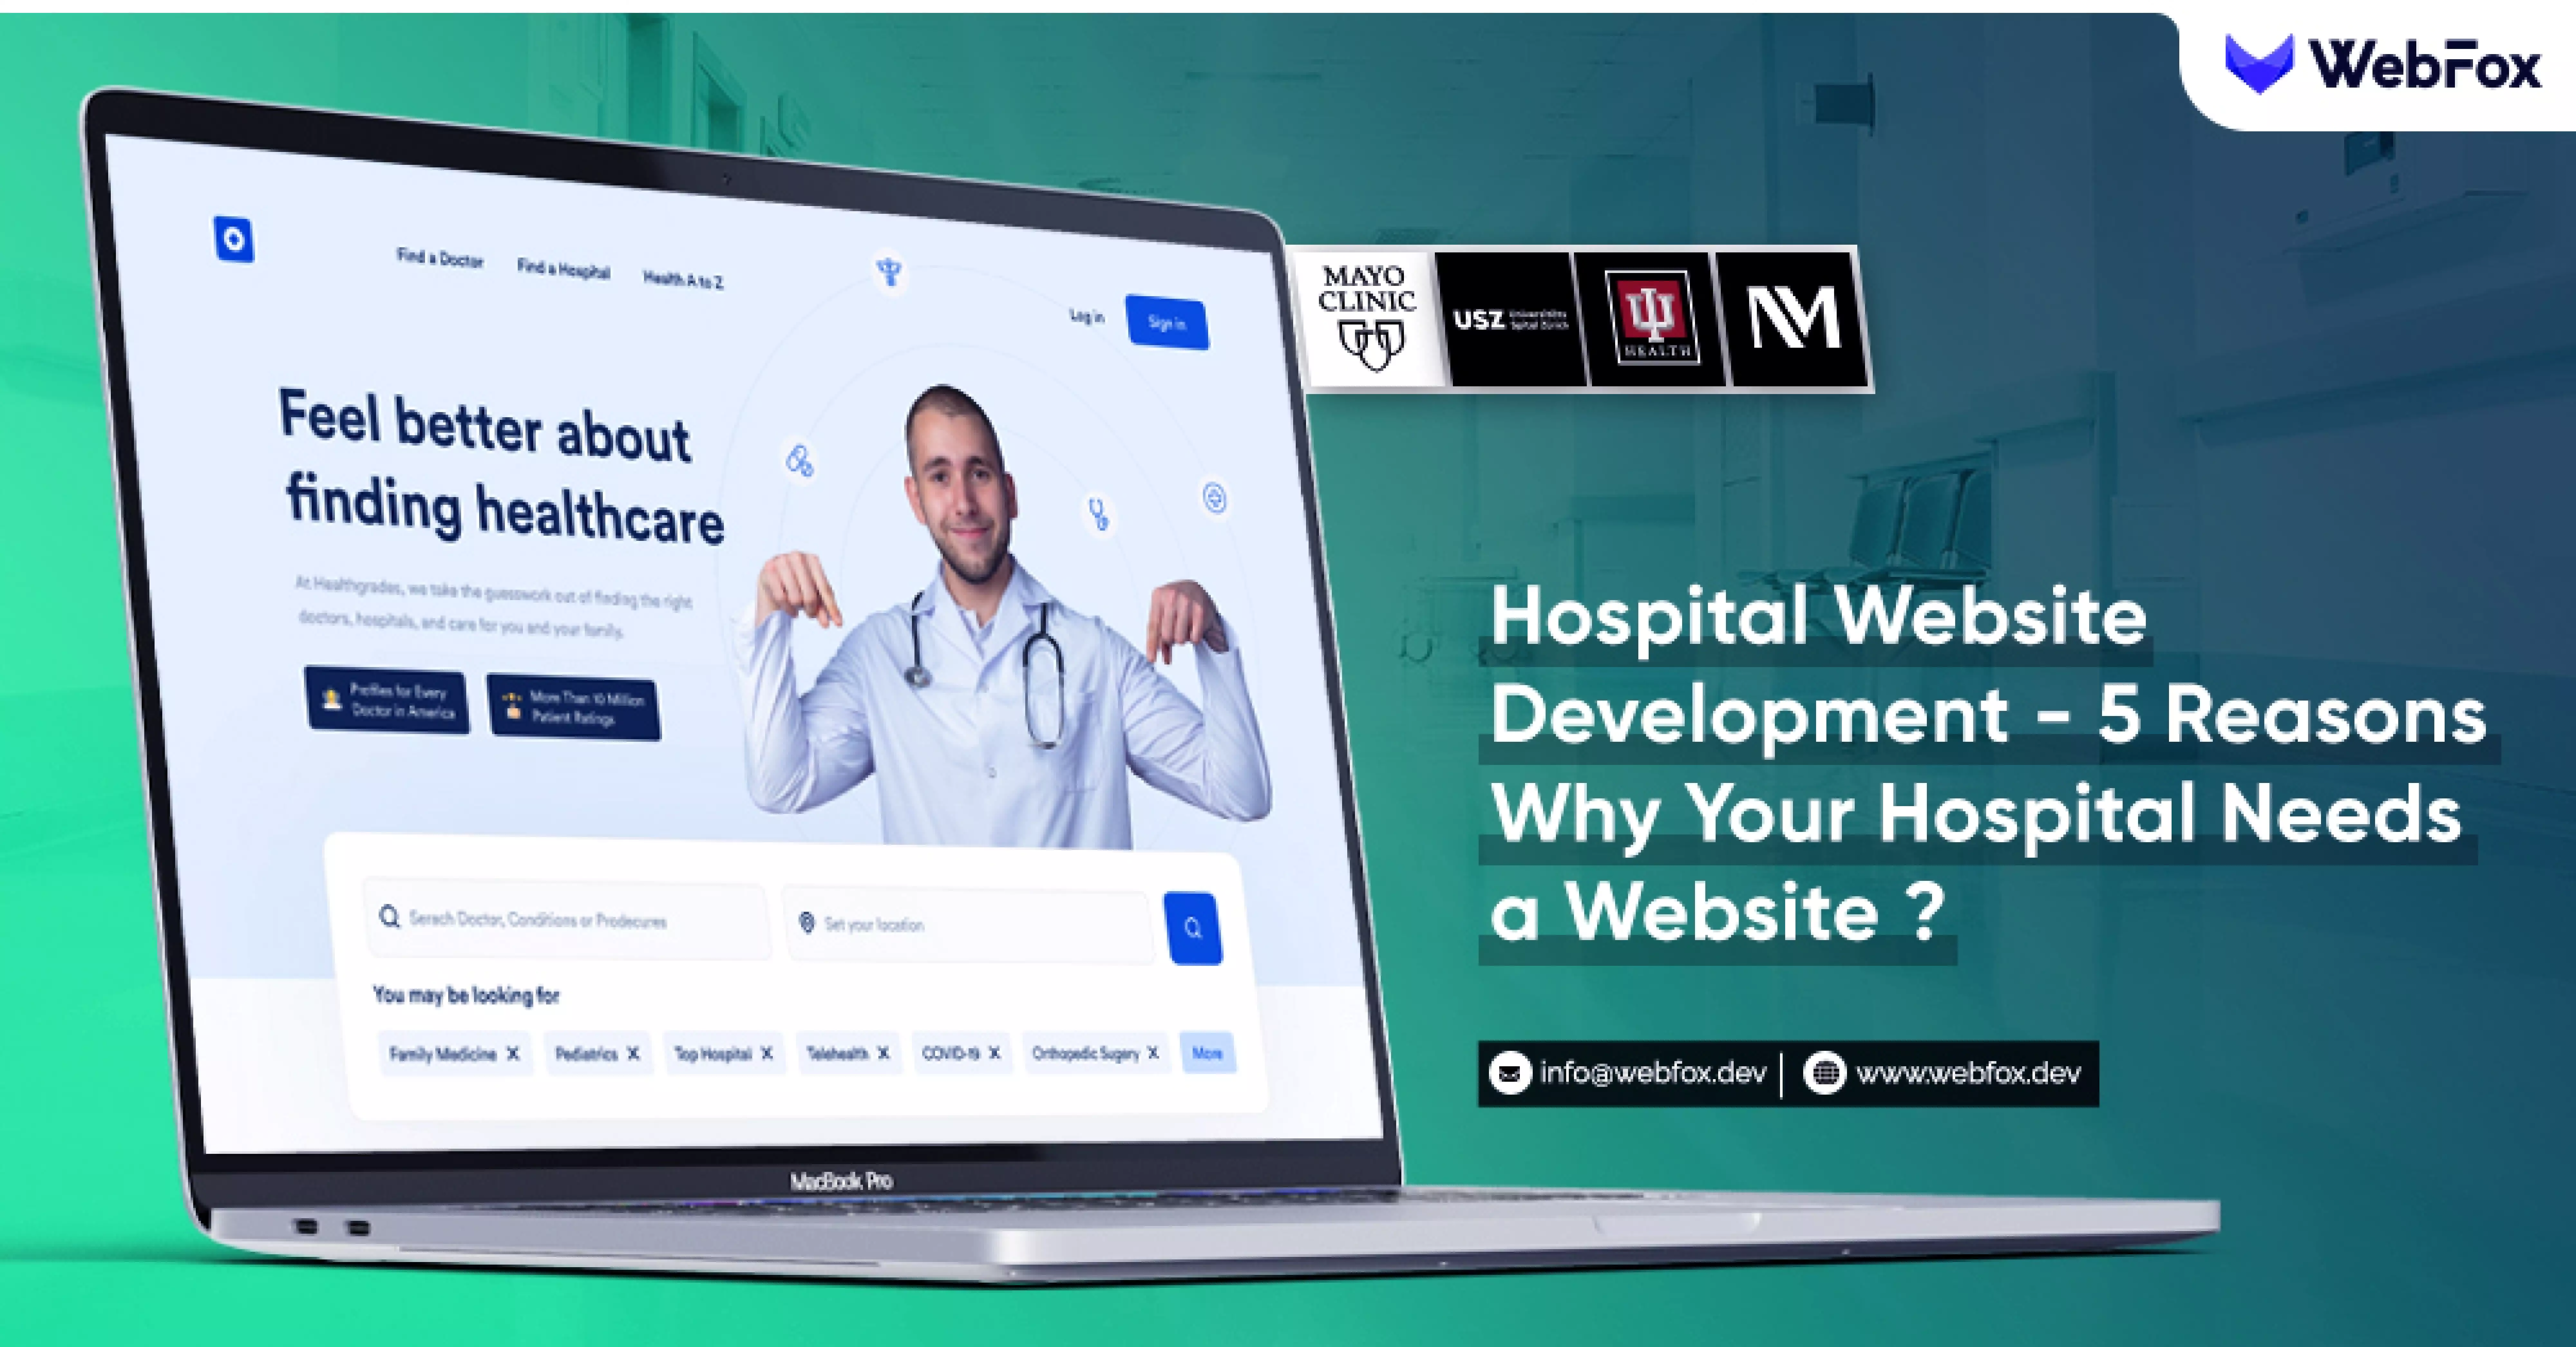 Hospital Website Development - 5 Reasons Why Your Hospital Needs a Website